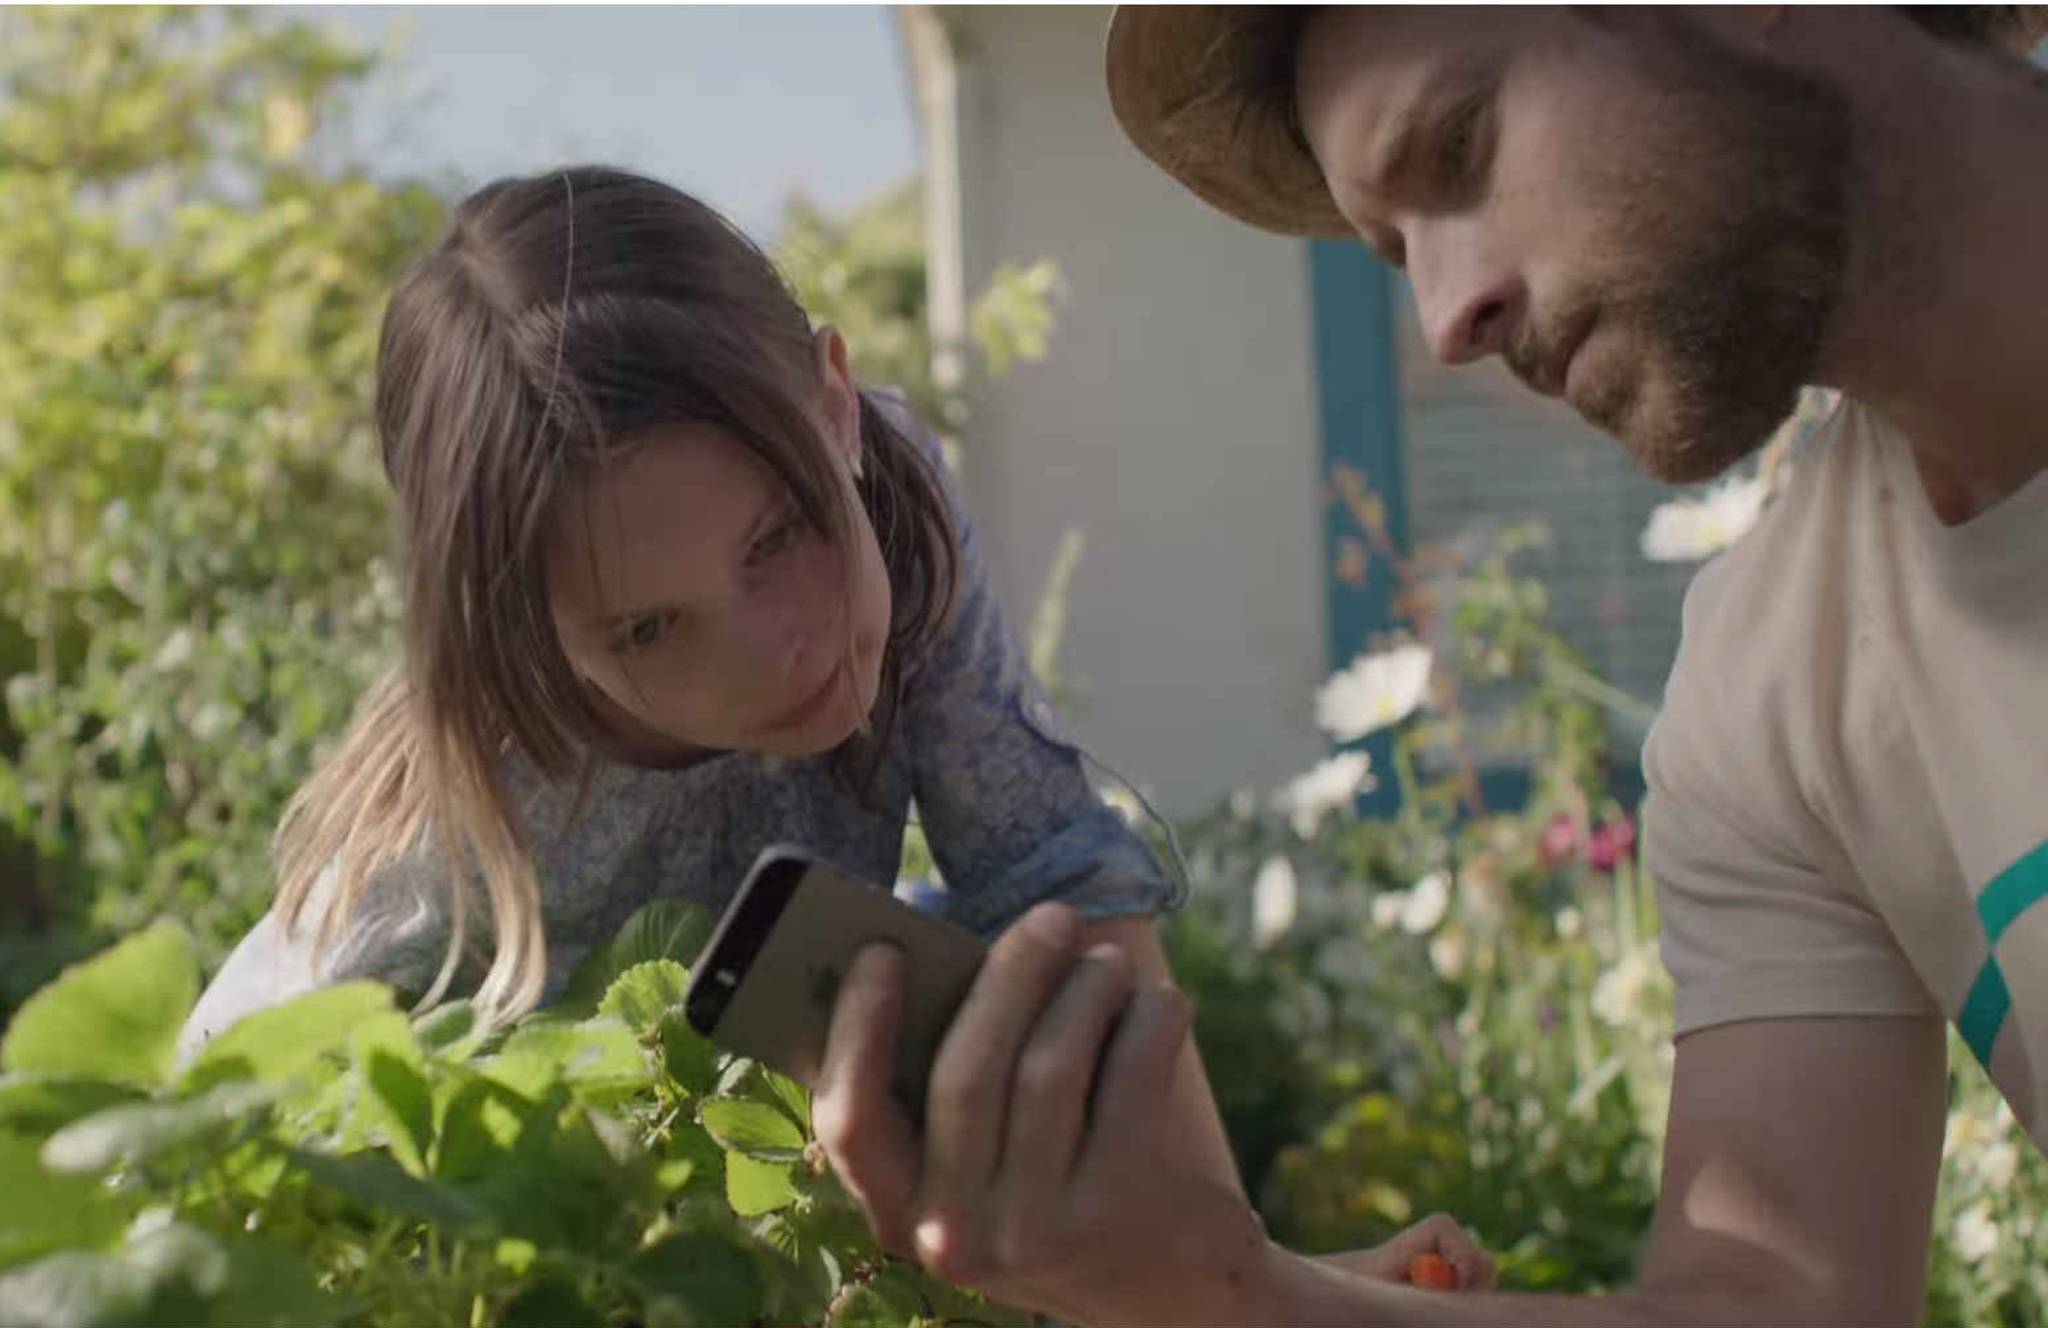 Apple's advert appeals to 'drone parents'